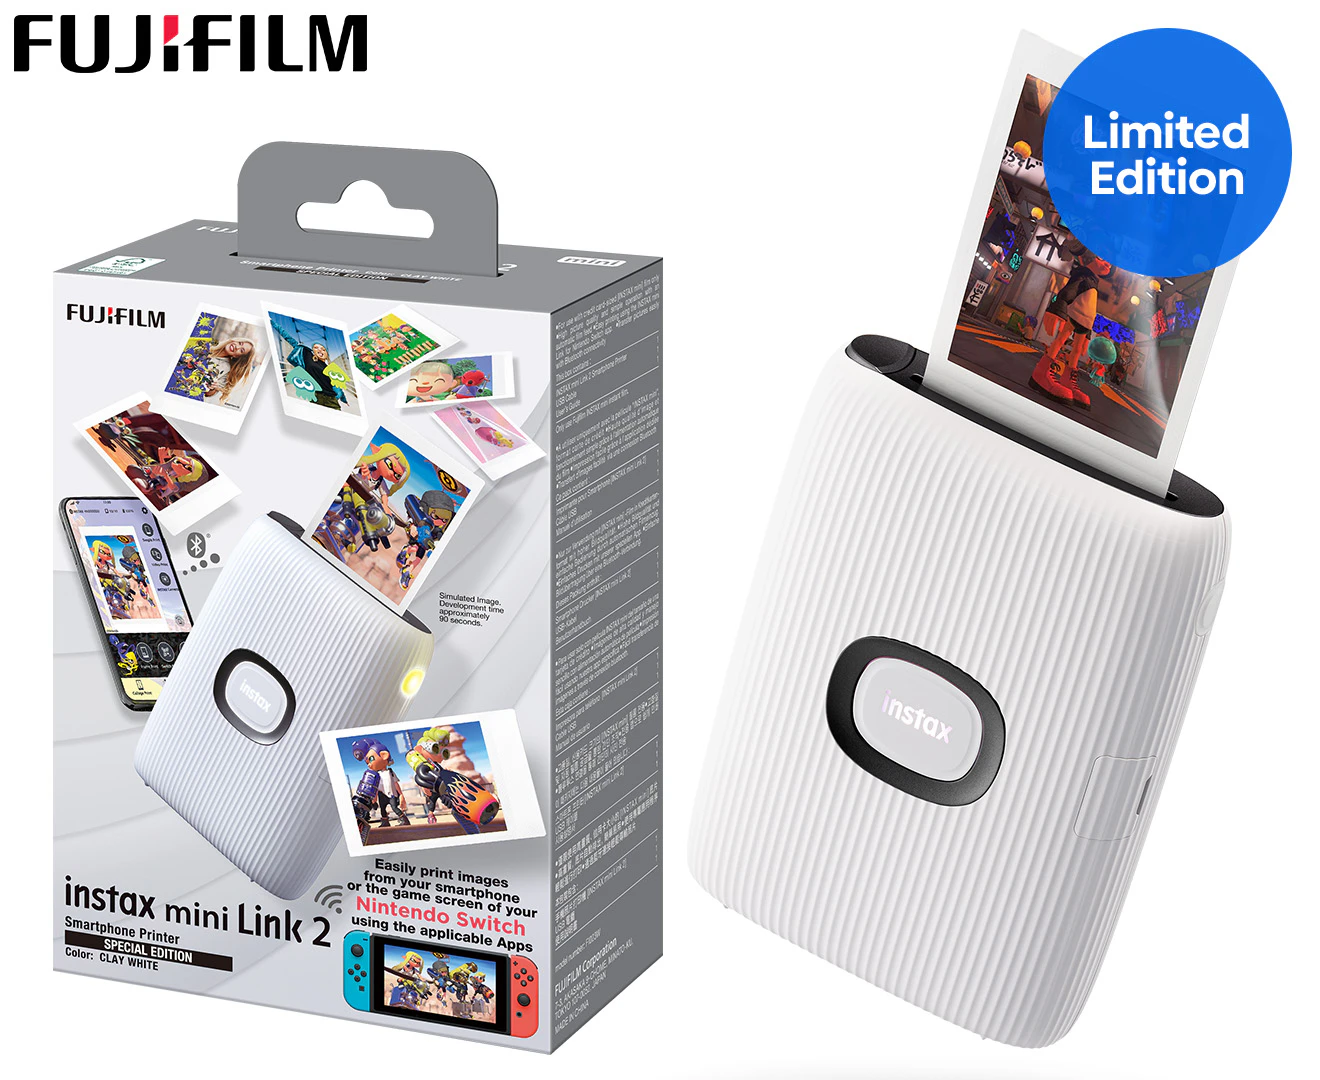 Fujifilm Instax Mini Link 2 Wireless Smartphone Printer, Clay